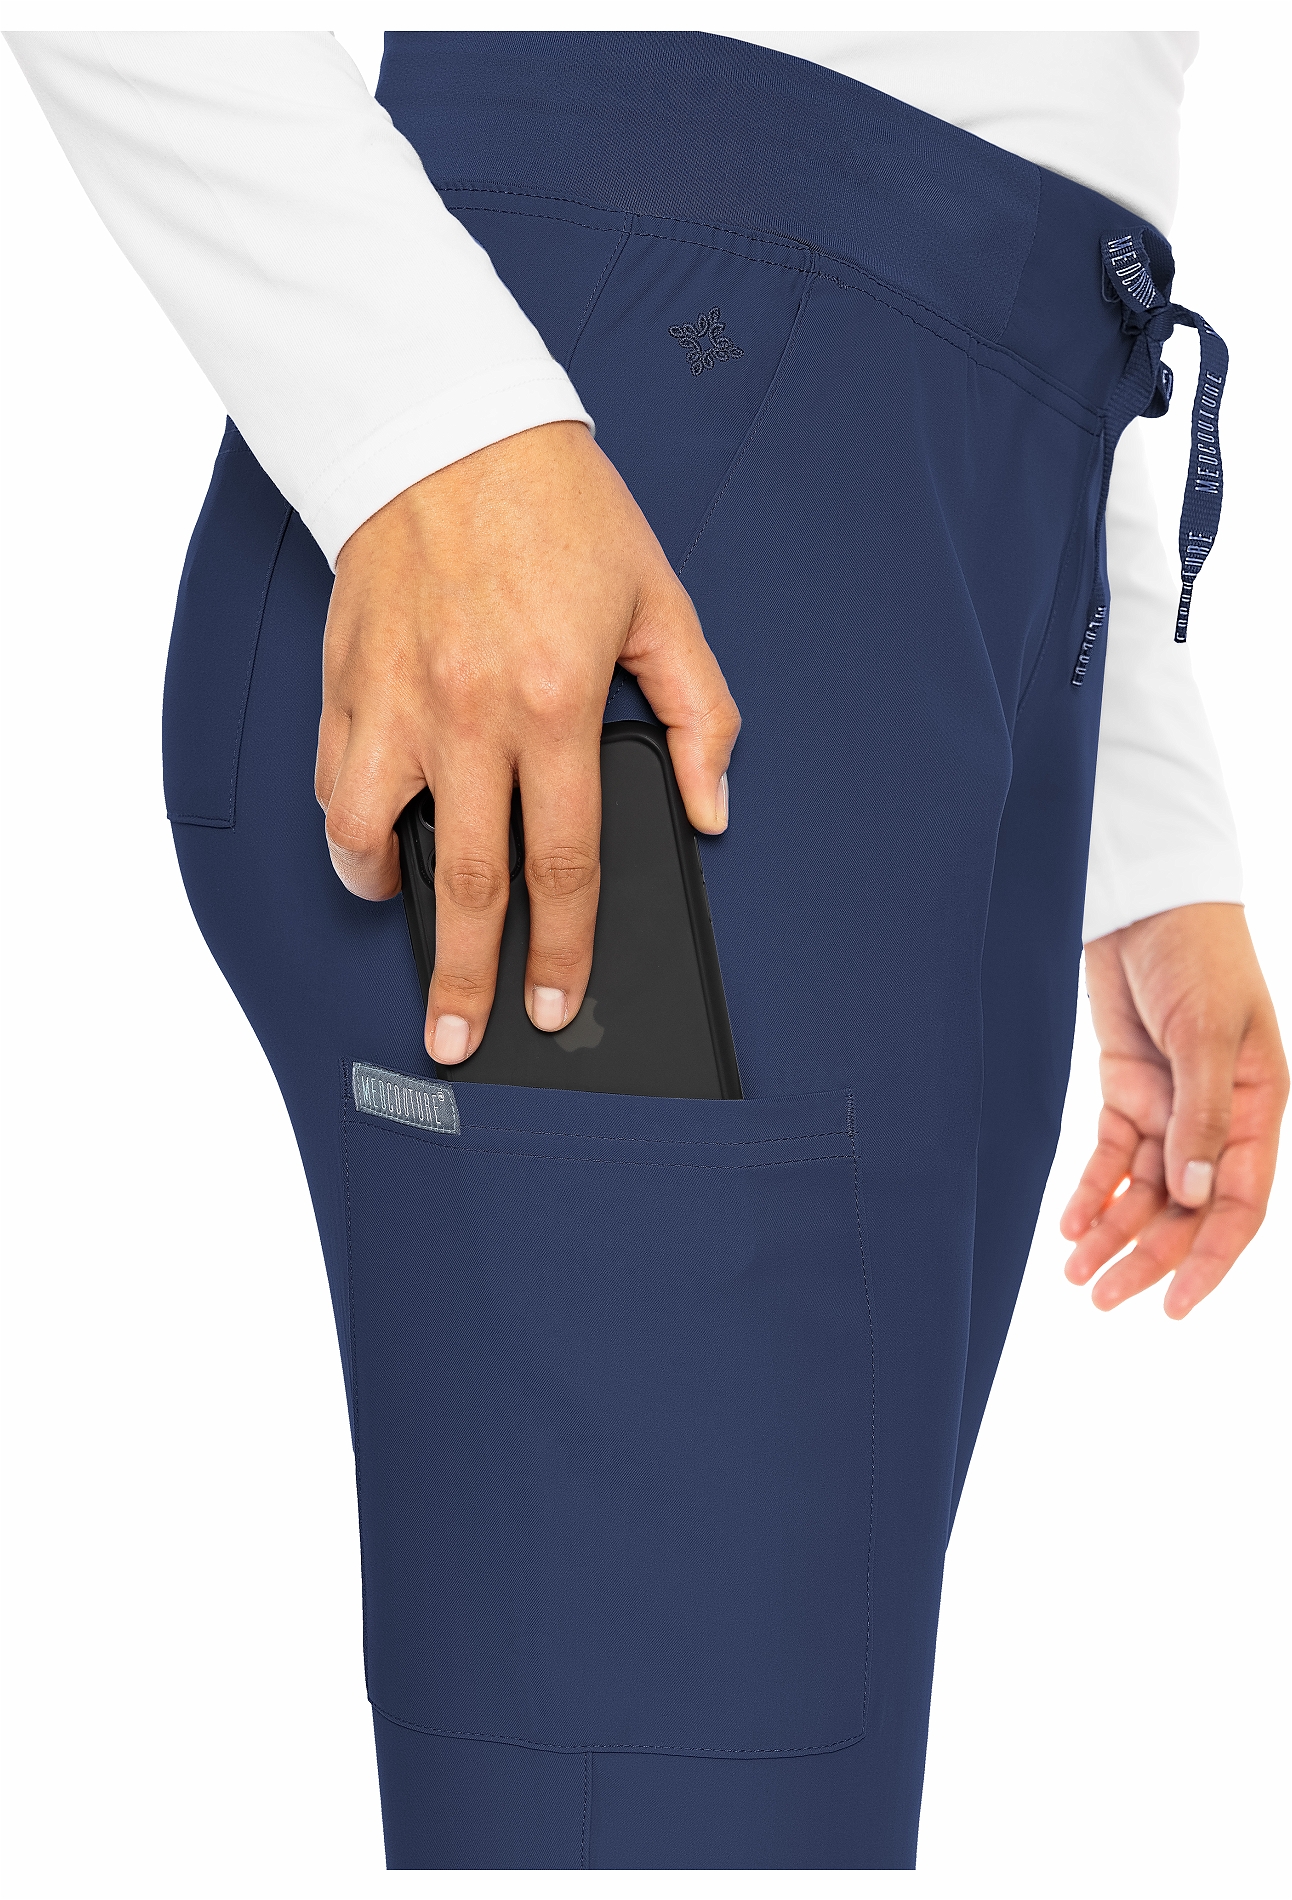 Med Couture Insight Women's Jogger Scrub Pants-MC2711 | Medical Scrubs ...